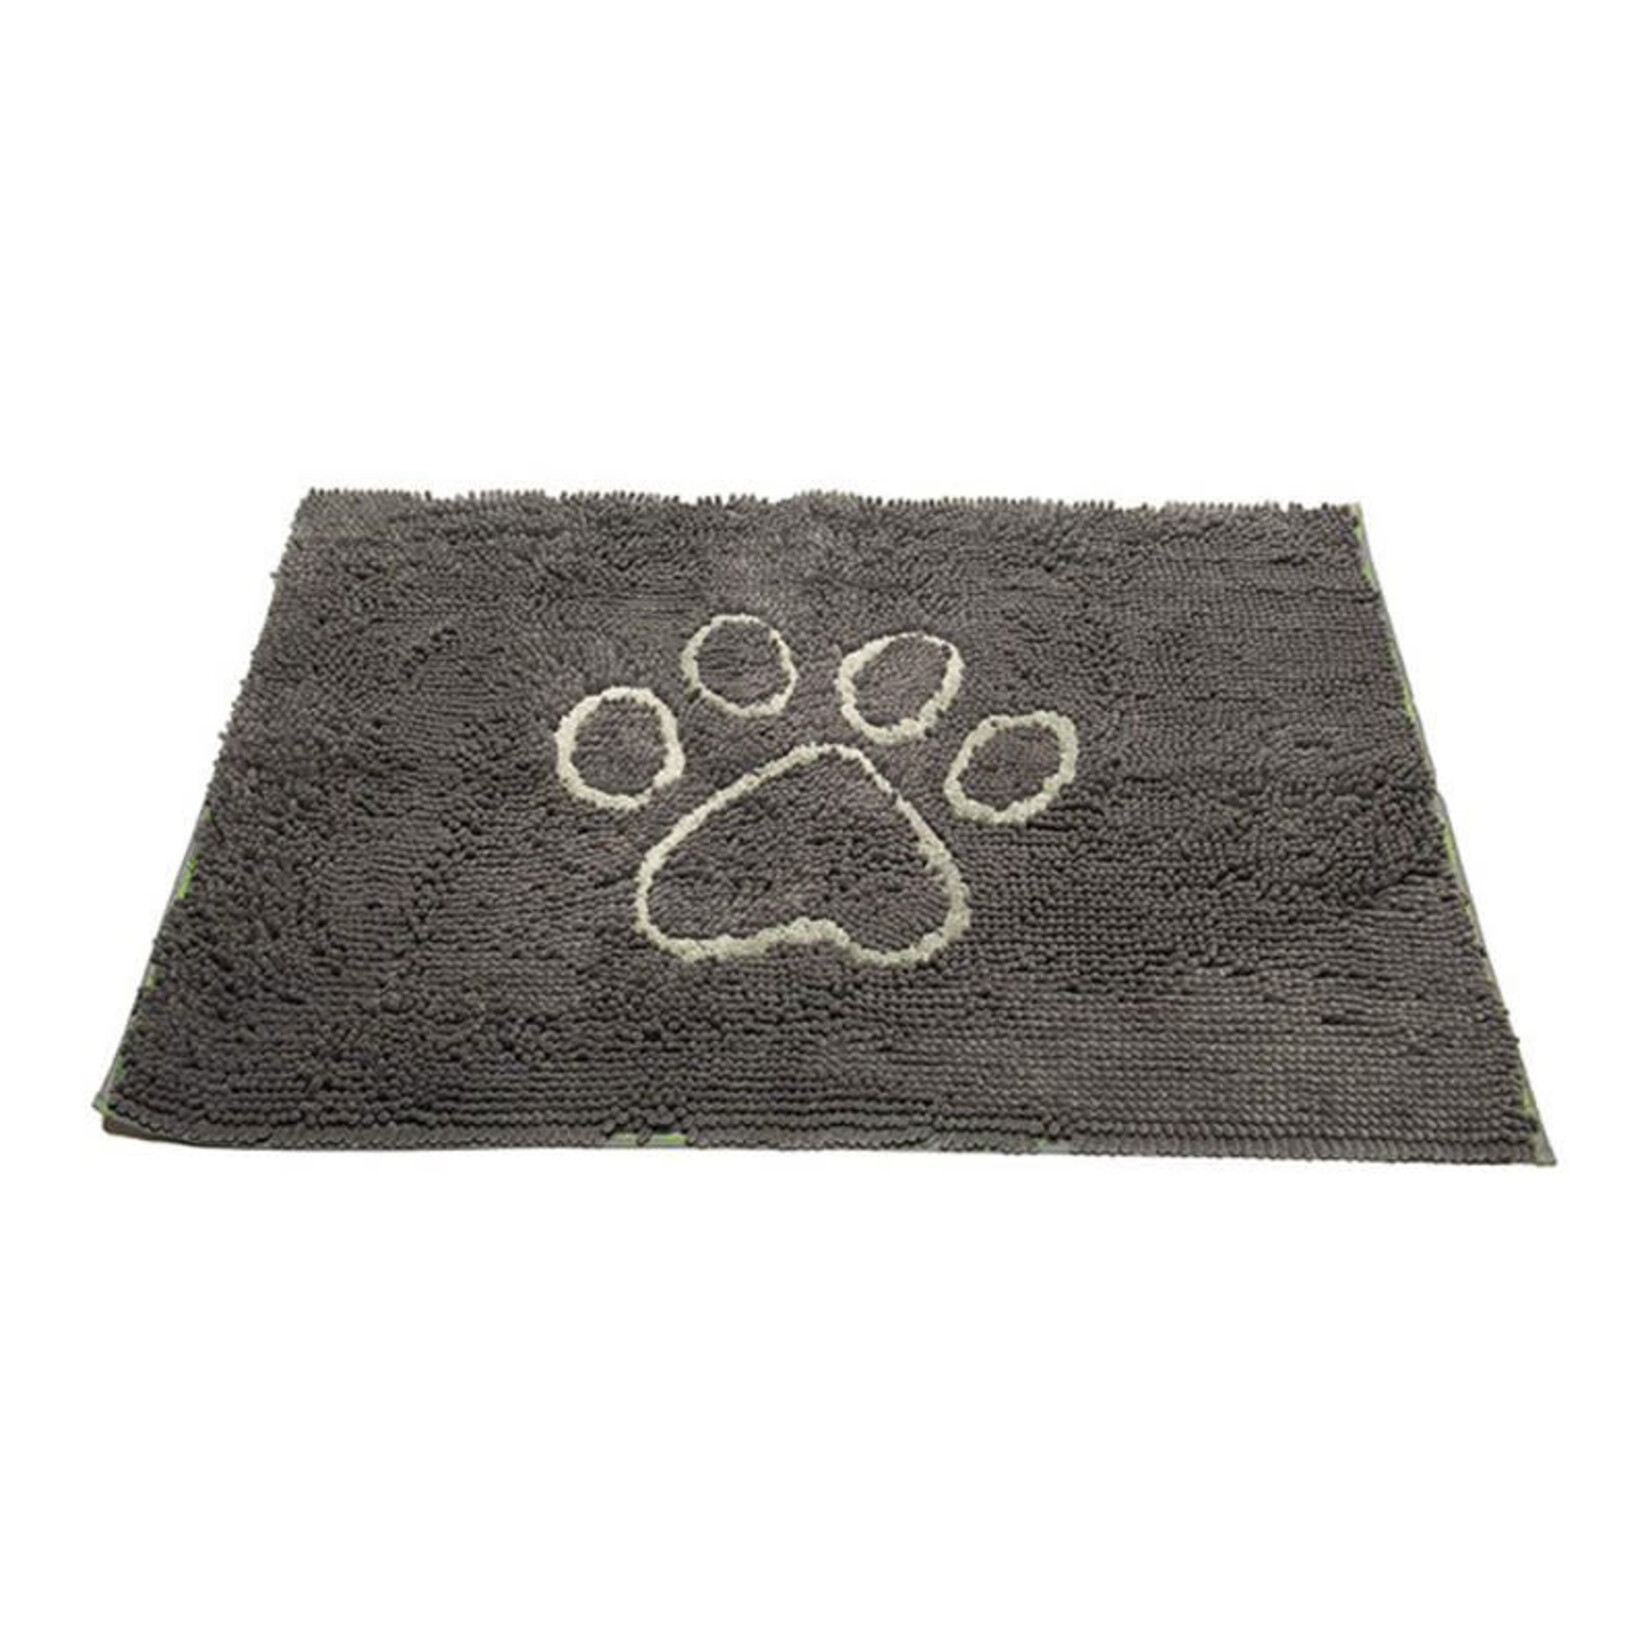 Dog Gone Smart - Dirty Dog Doormat - Misty Grey